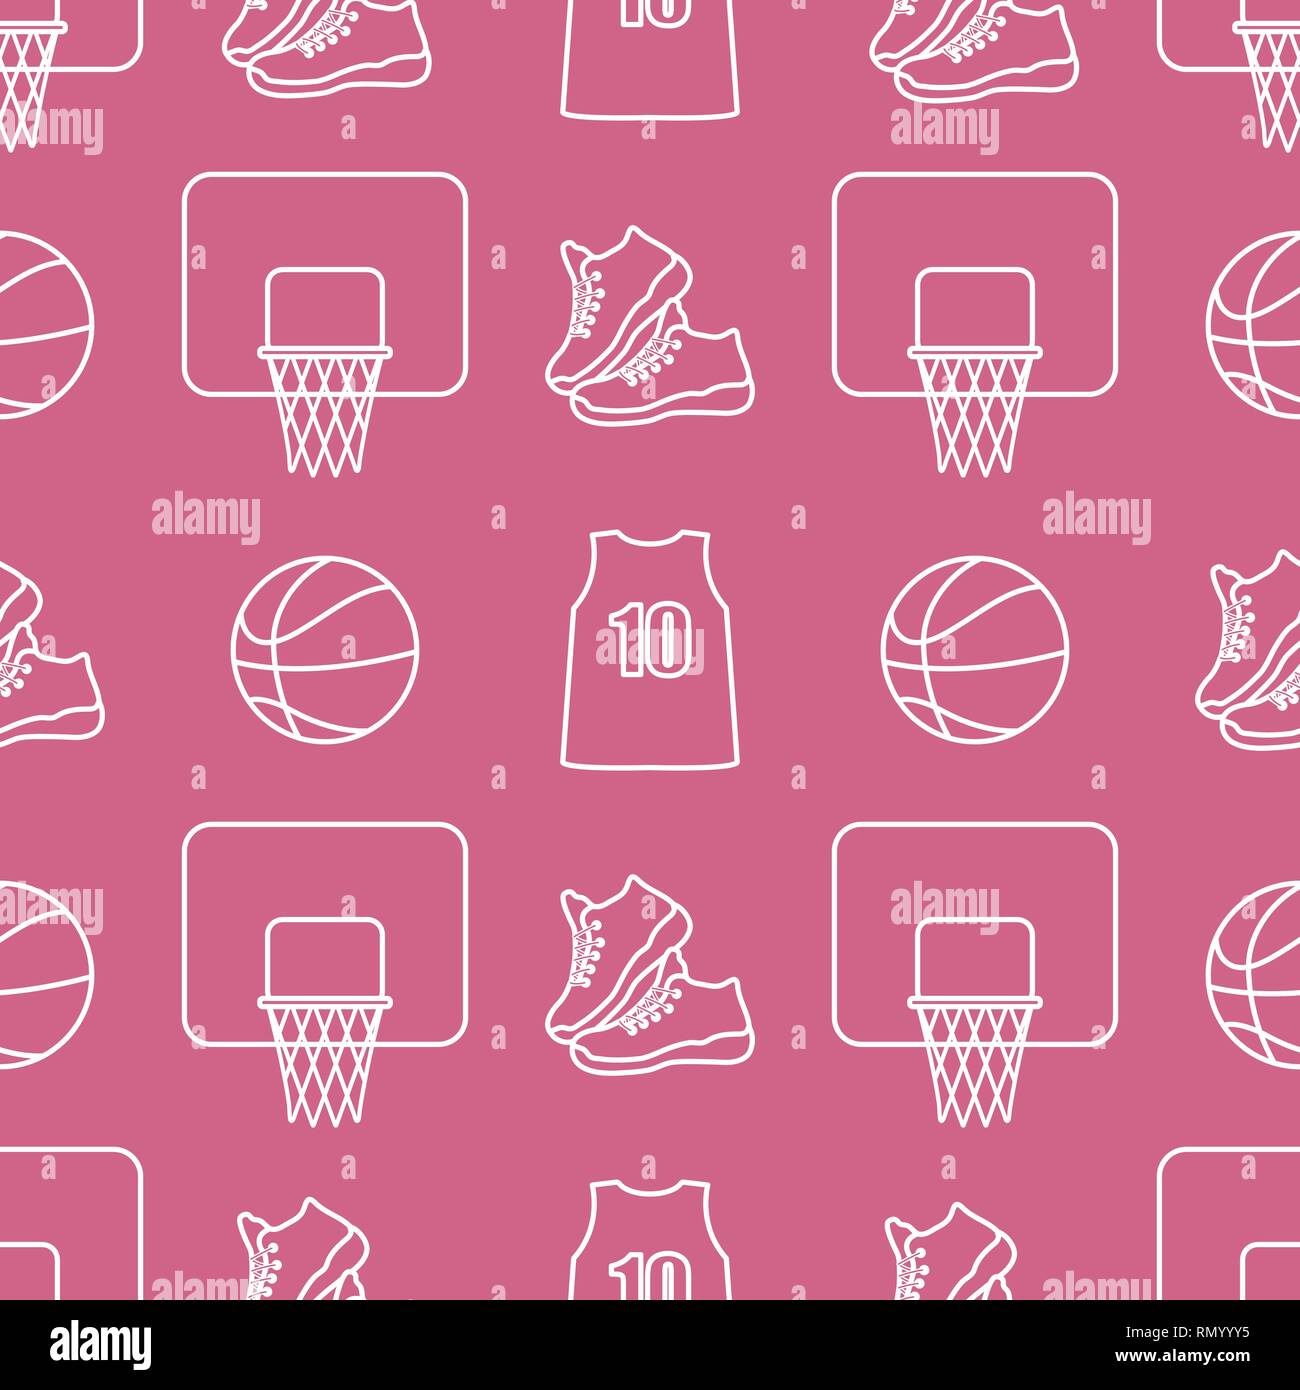 balls sports pattern background vector illustration design Stock